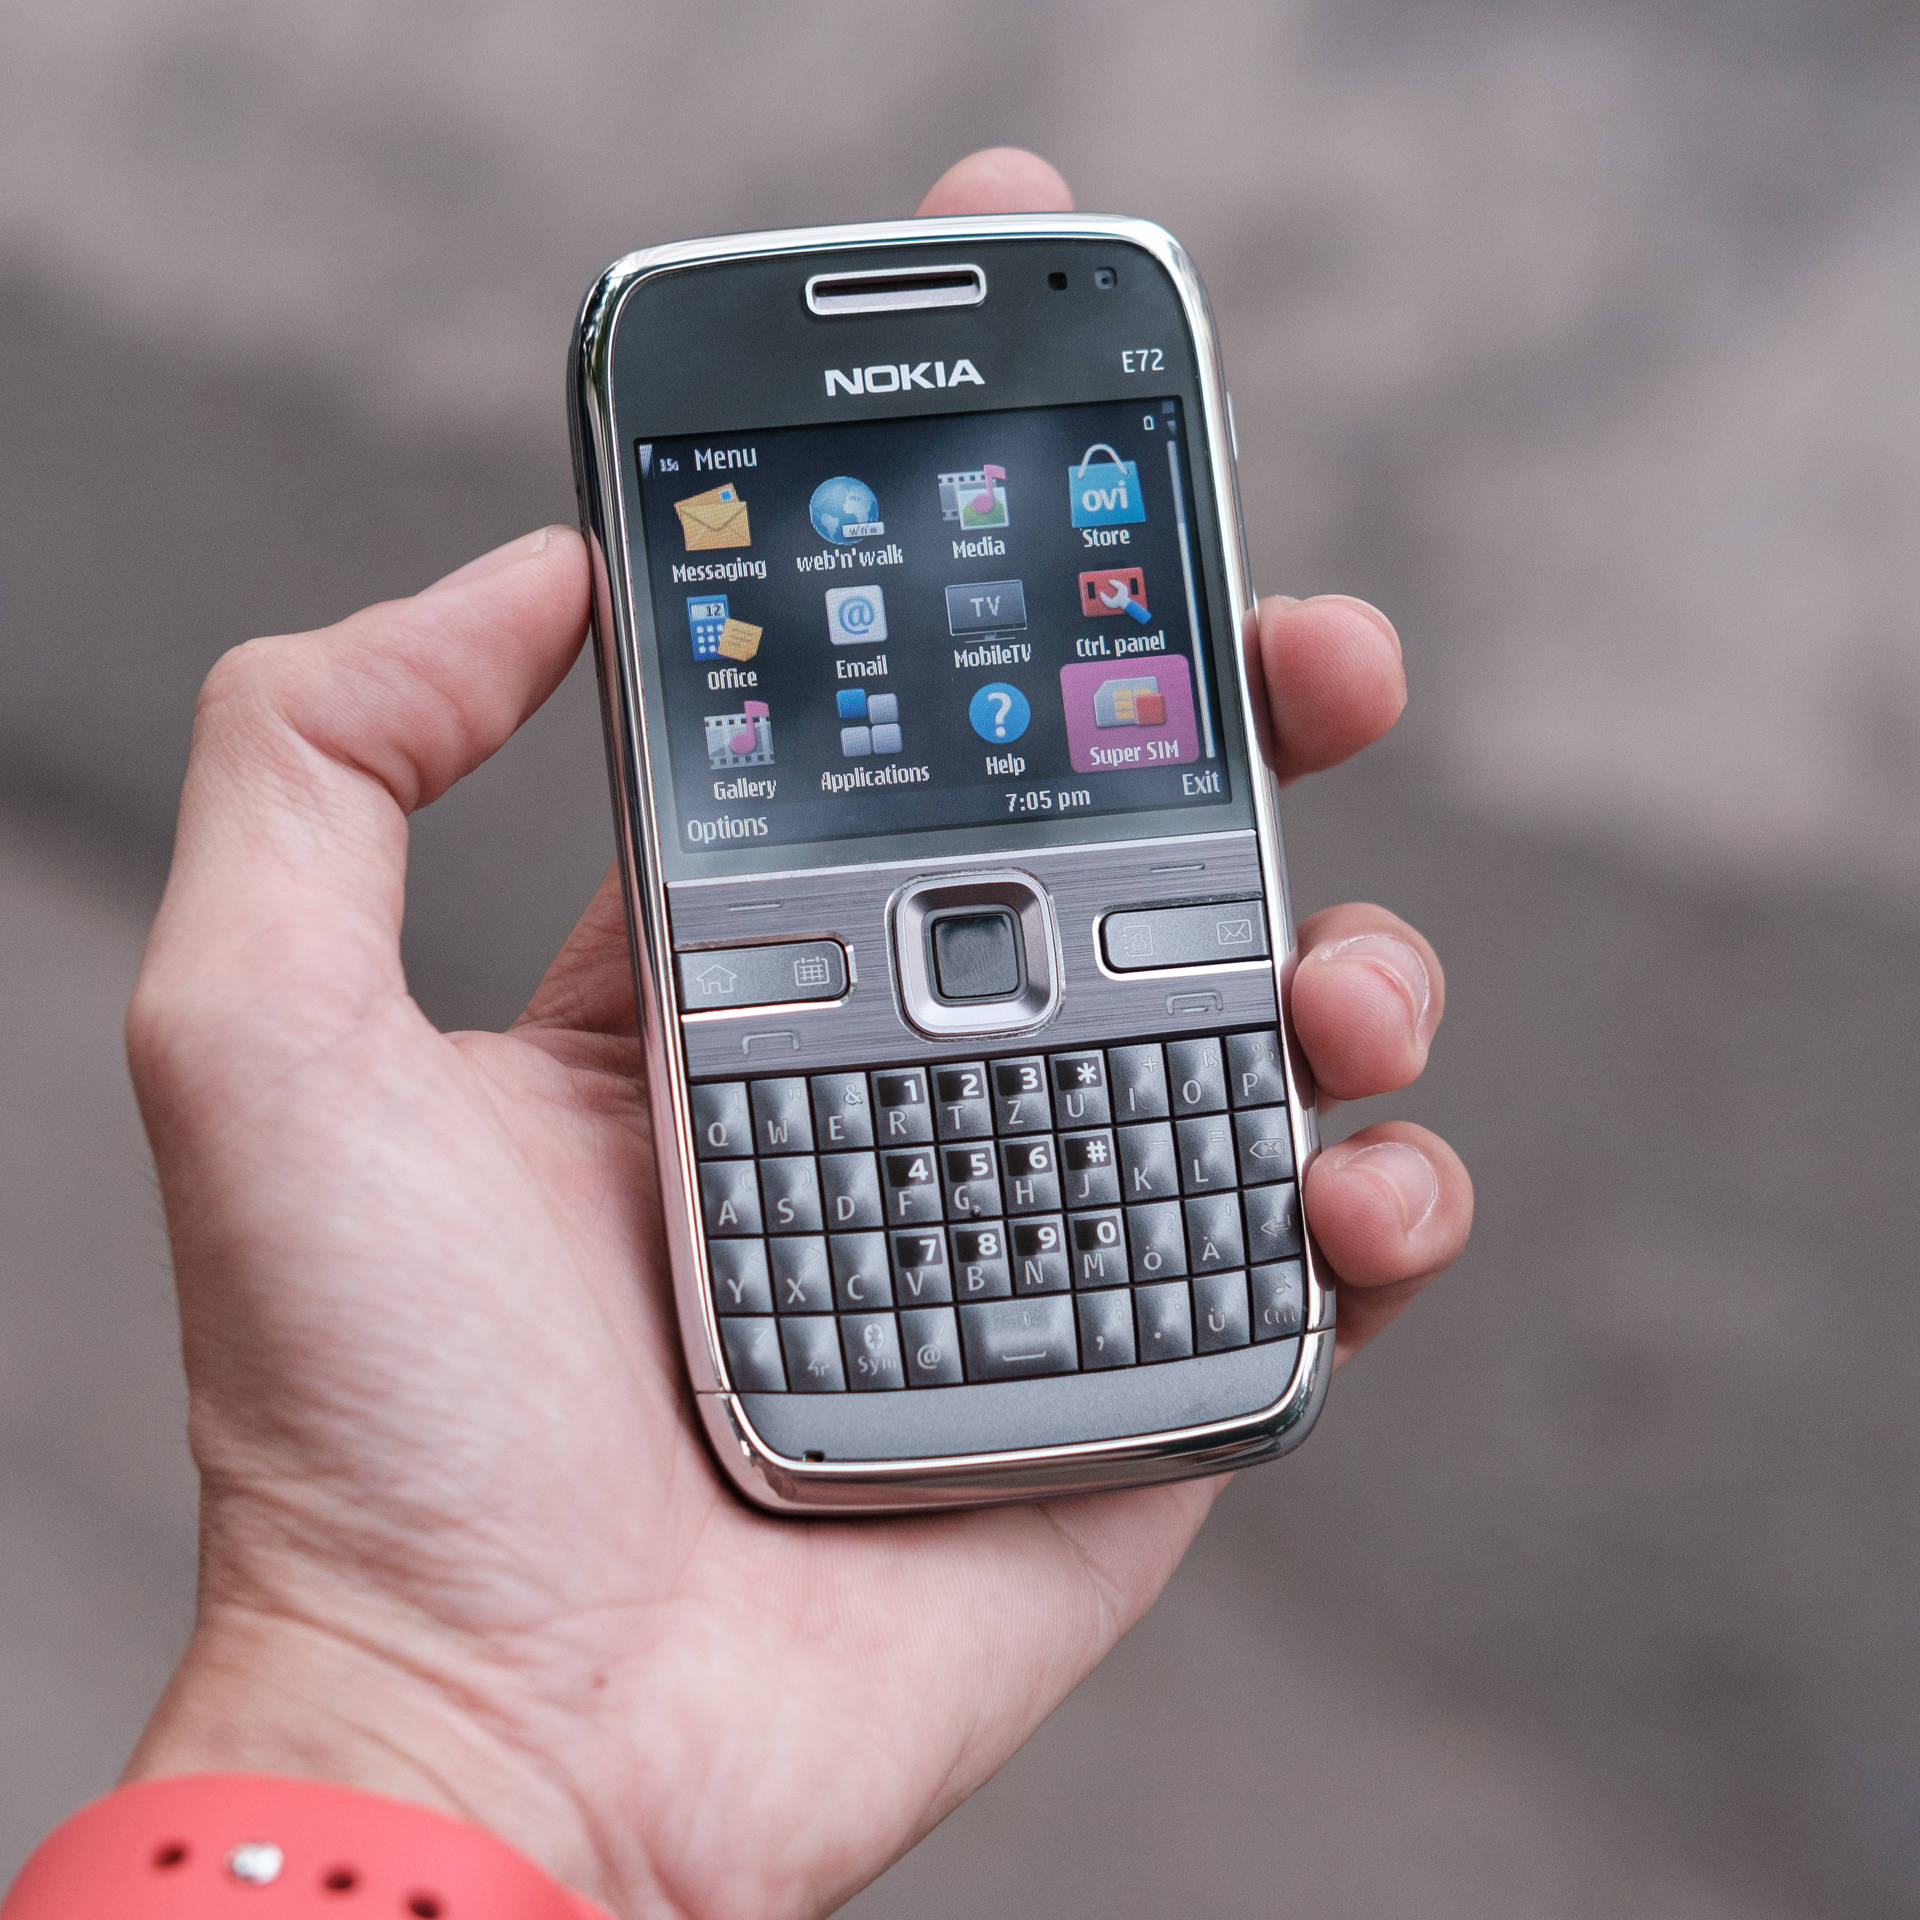 Nokia E72 Keypad Phone